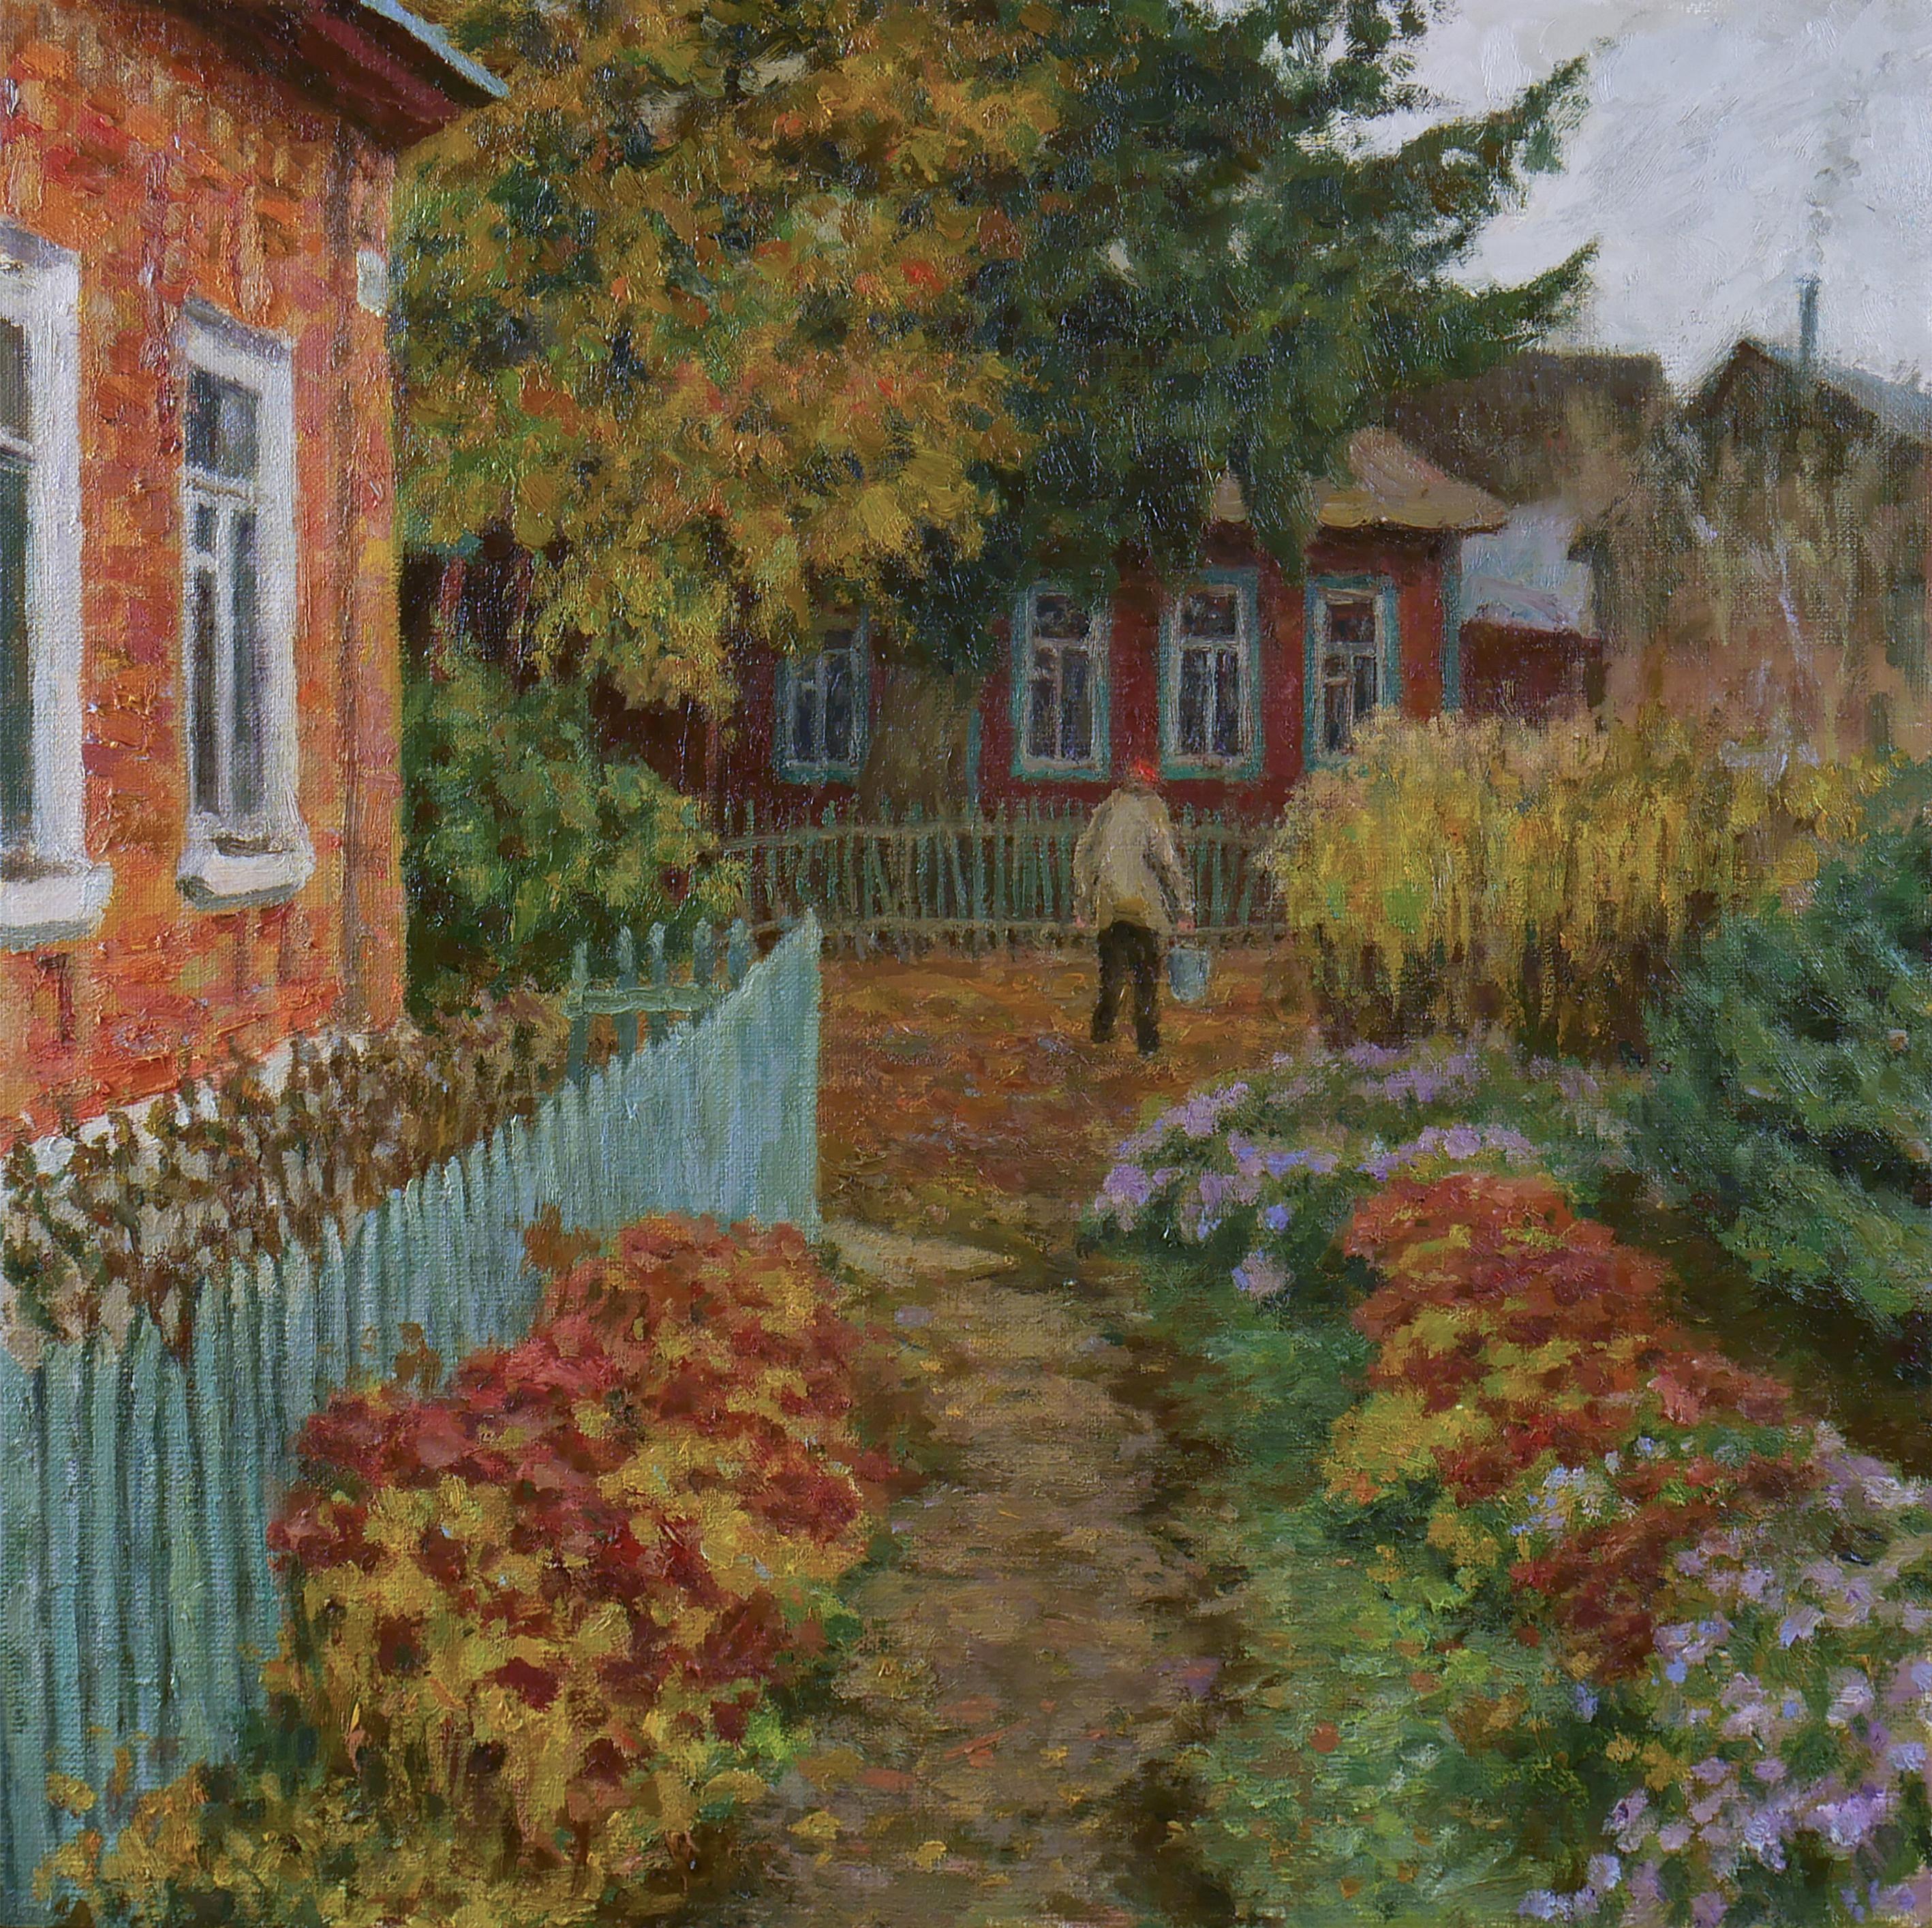 The Autumn Yard - Herbst-Landschaftsgemälde